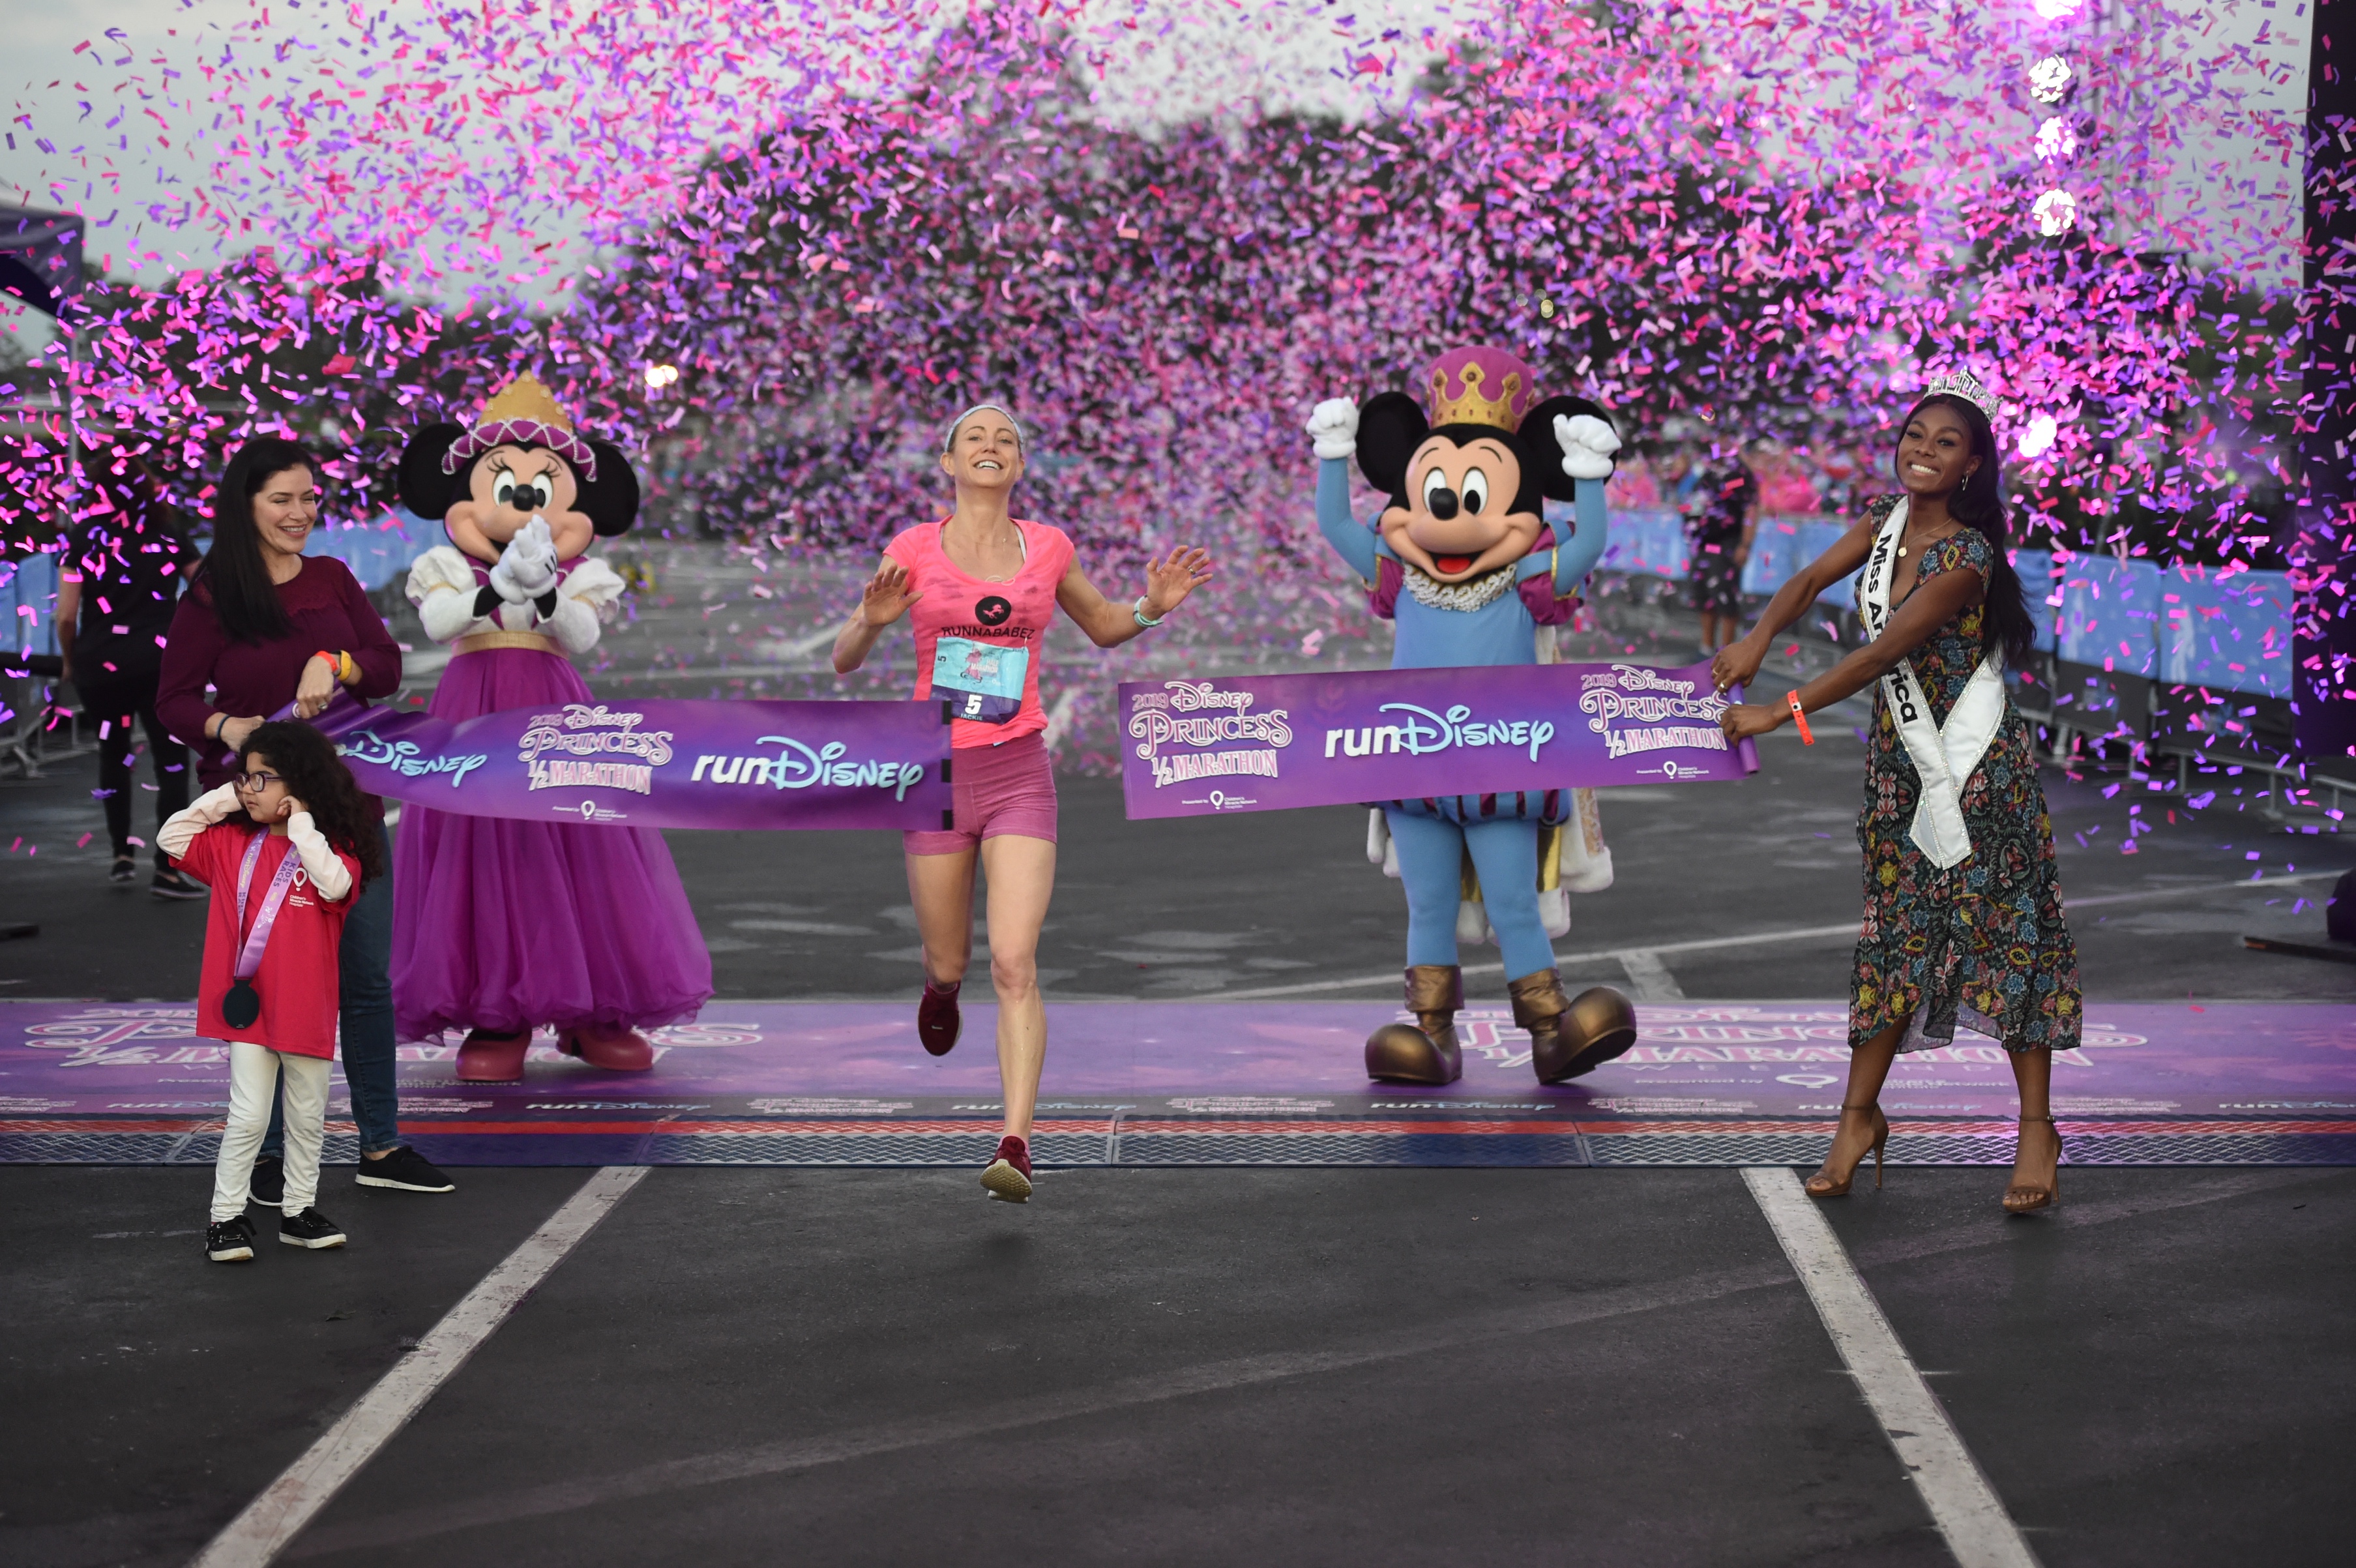 Missouri Runner Becomes Disney Royalty with Princess Half Marathon Victory Sunday